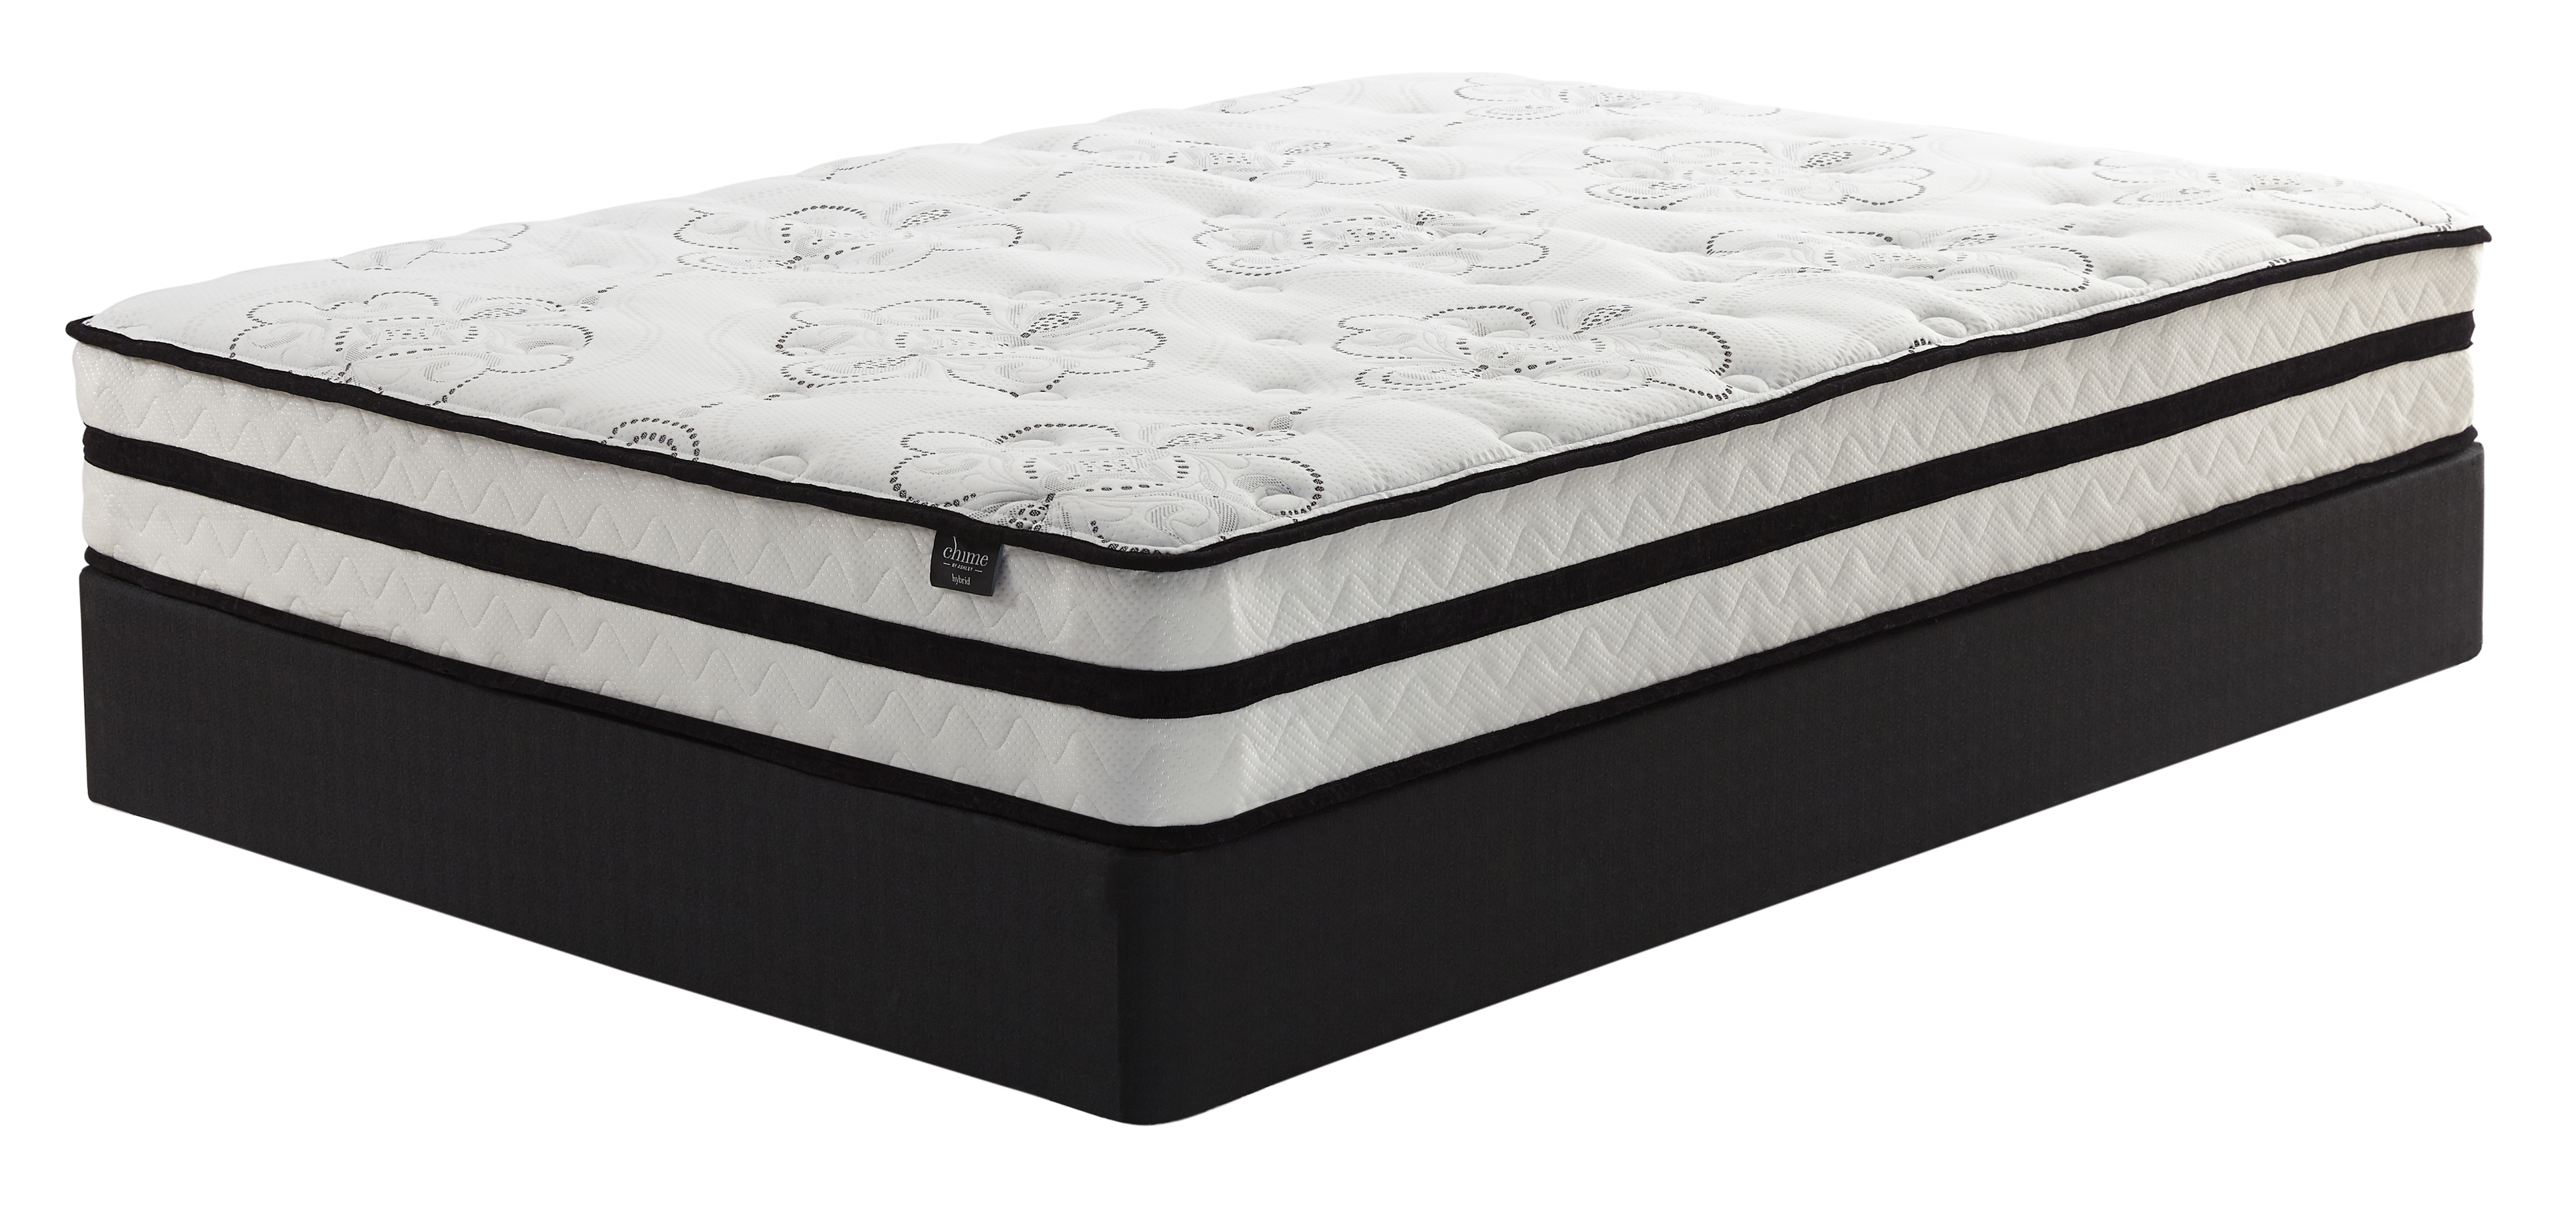 ashley sierra sleep mattress m95531 queen